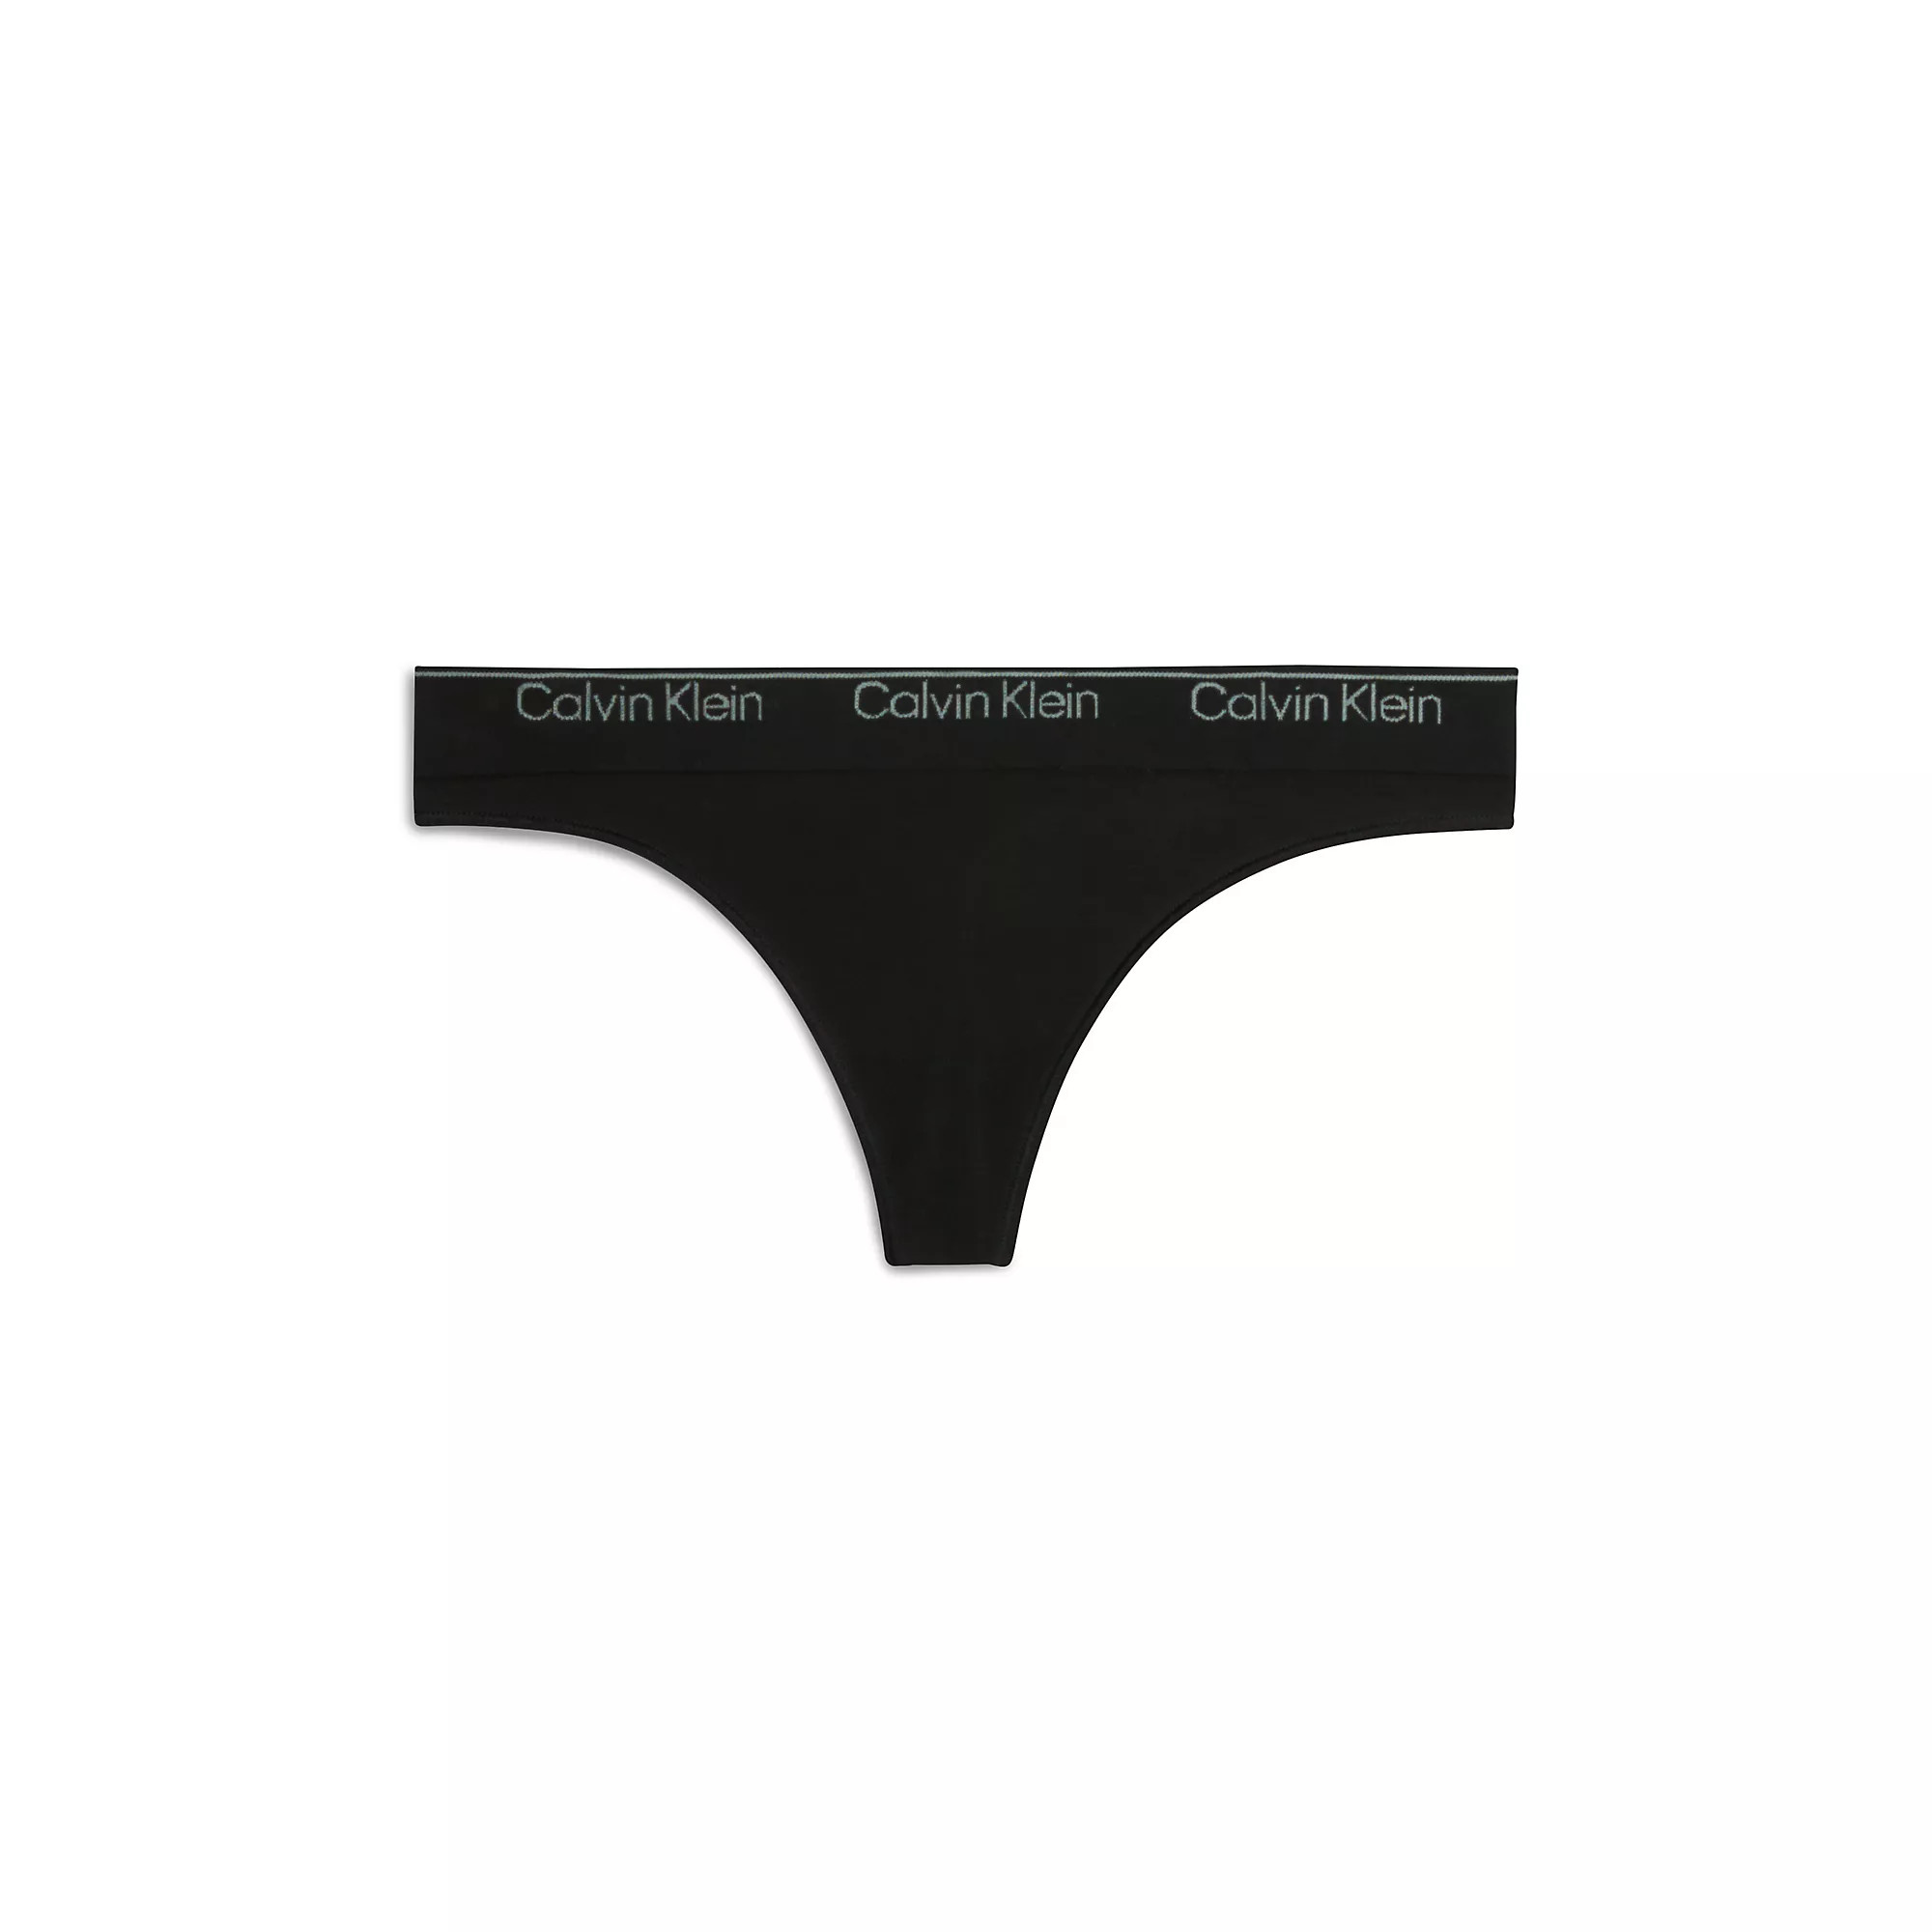 Spodní prádlo Dámské kalhotky THONG 000QF7095EUB1 - Calvin Klein 3XL